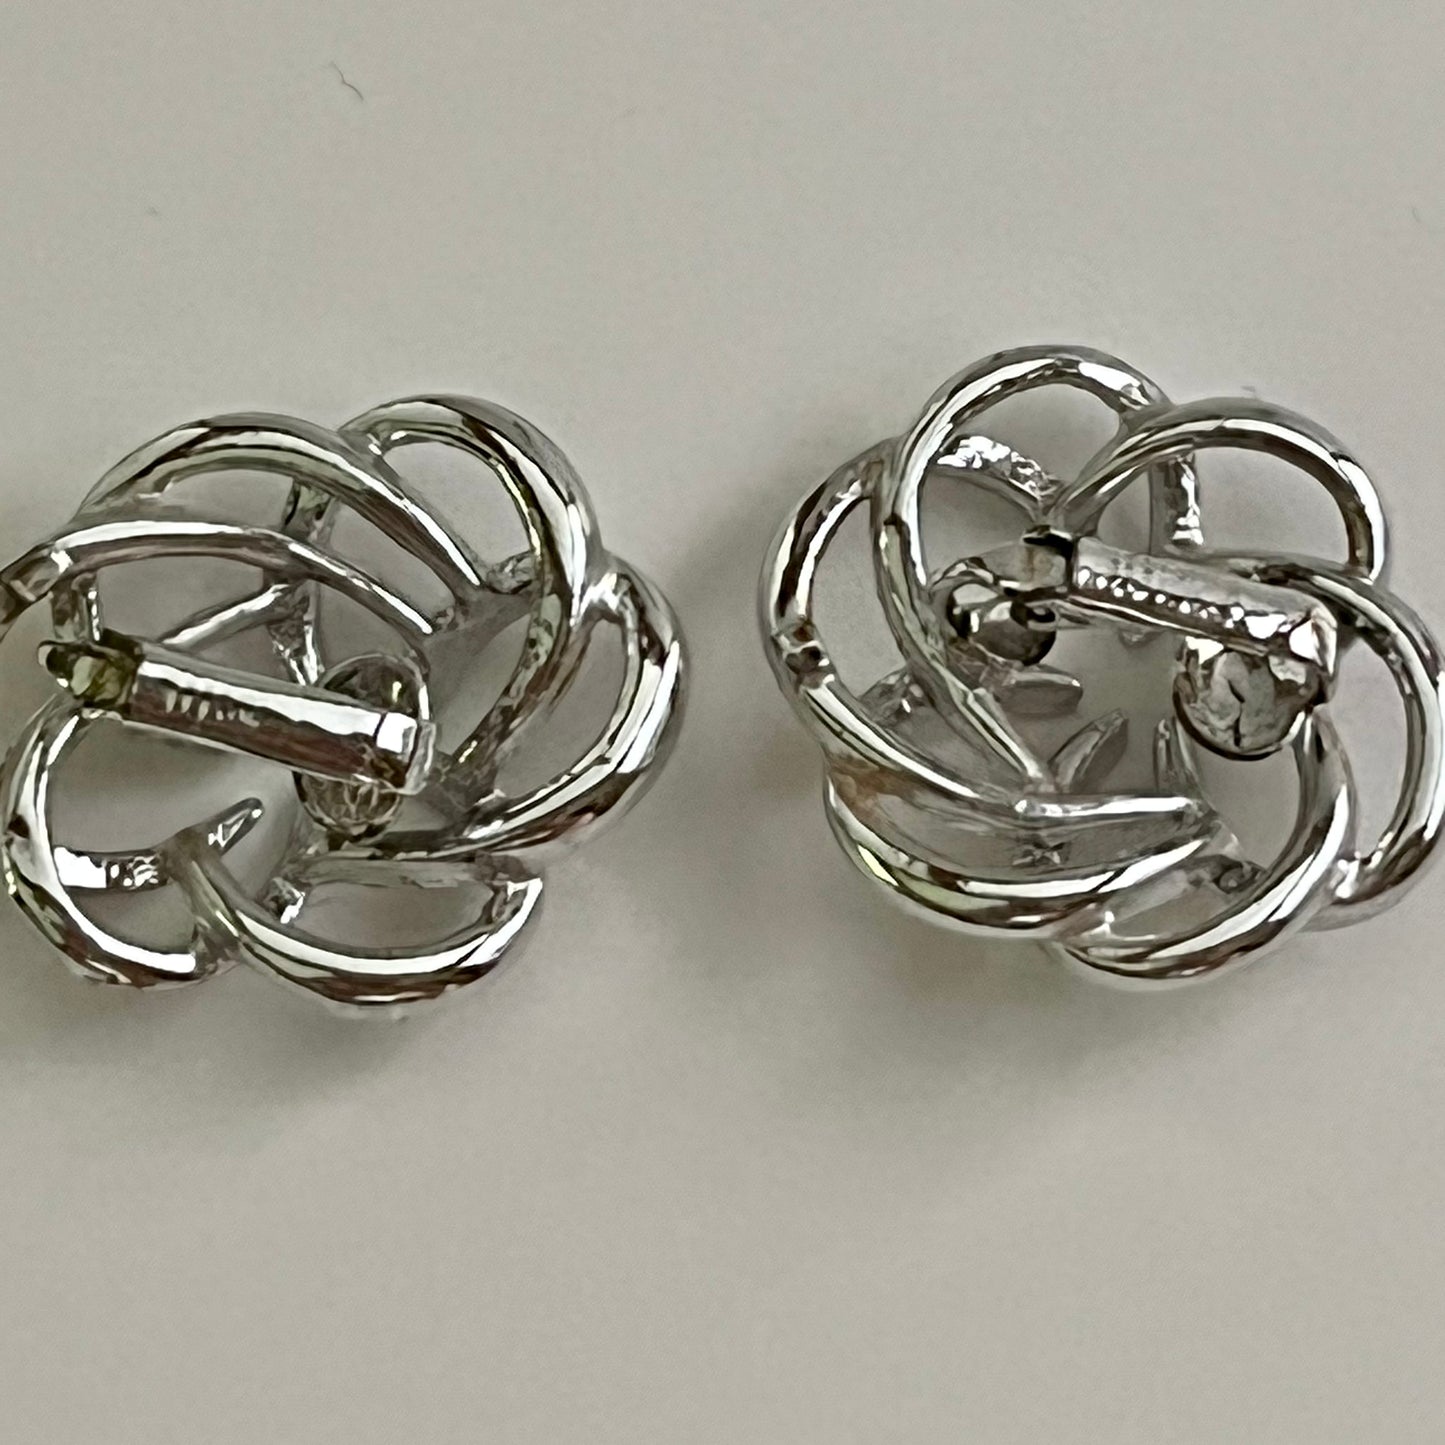 1967 Sarah Coventry Tailored Swirl Earrings